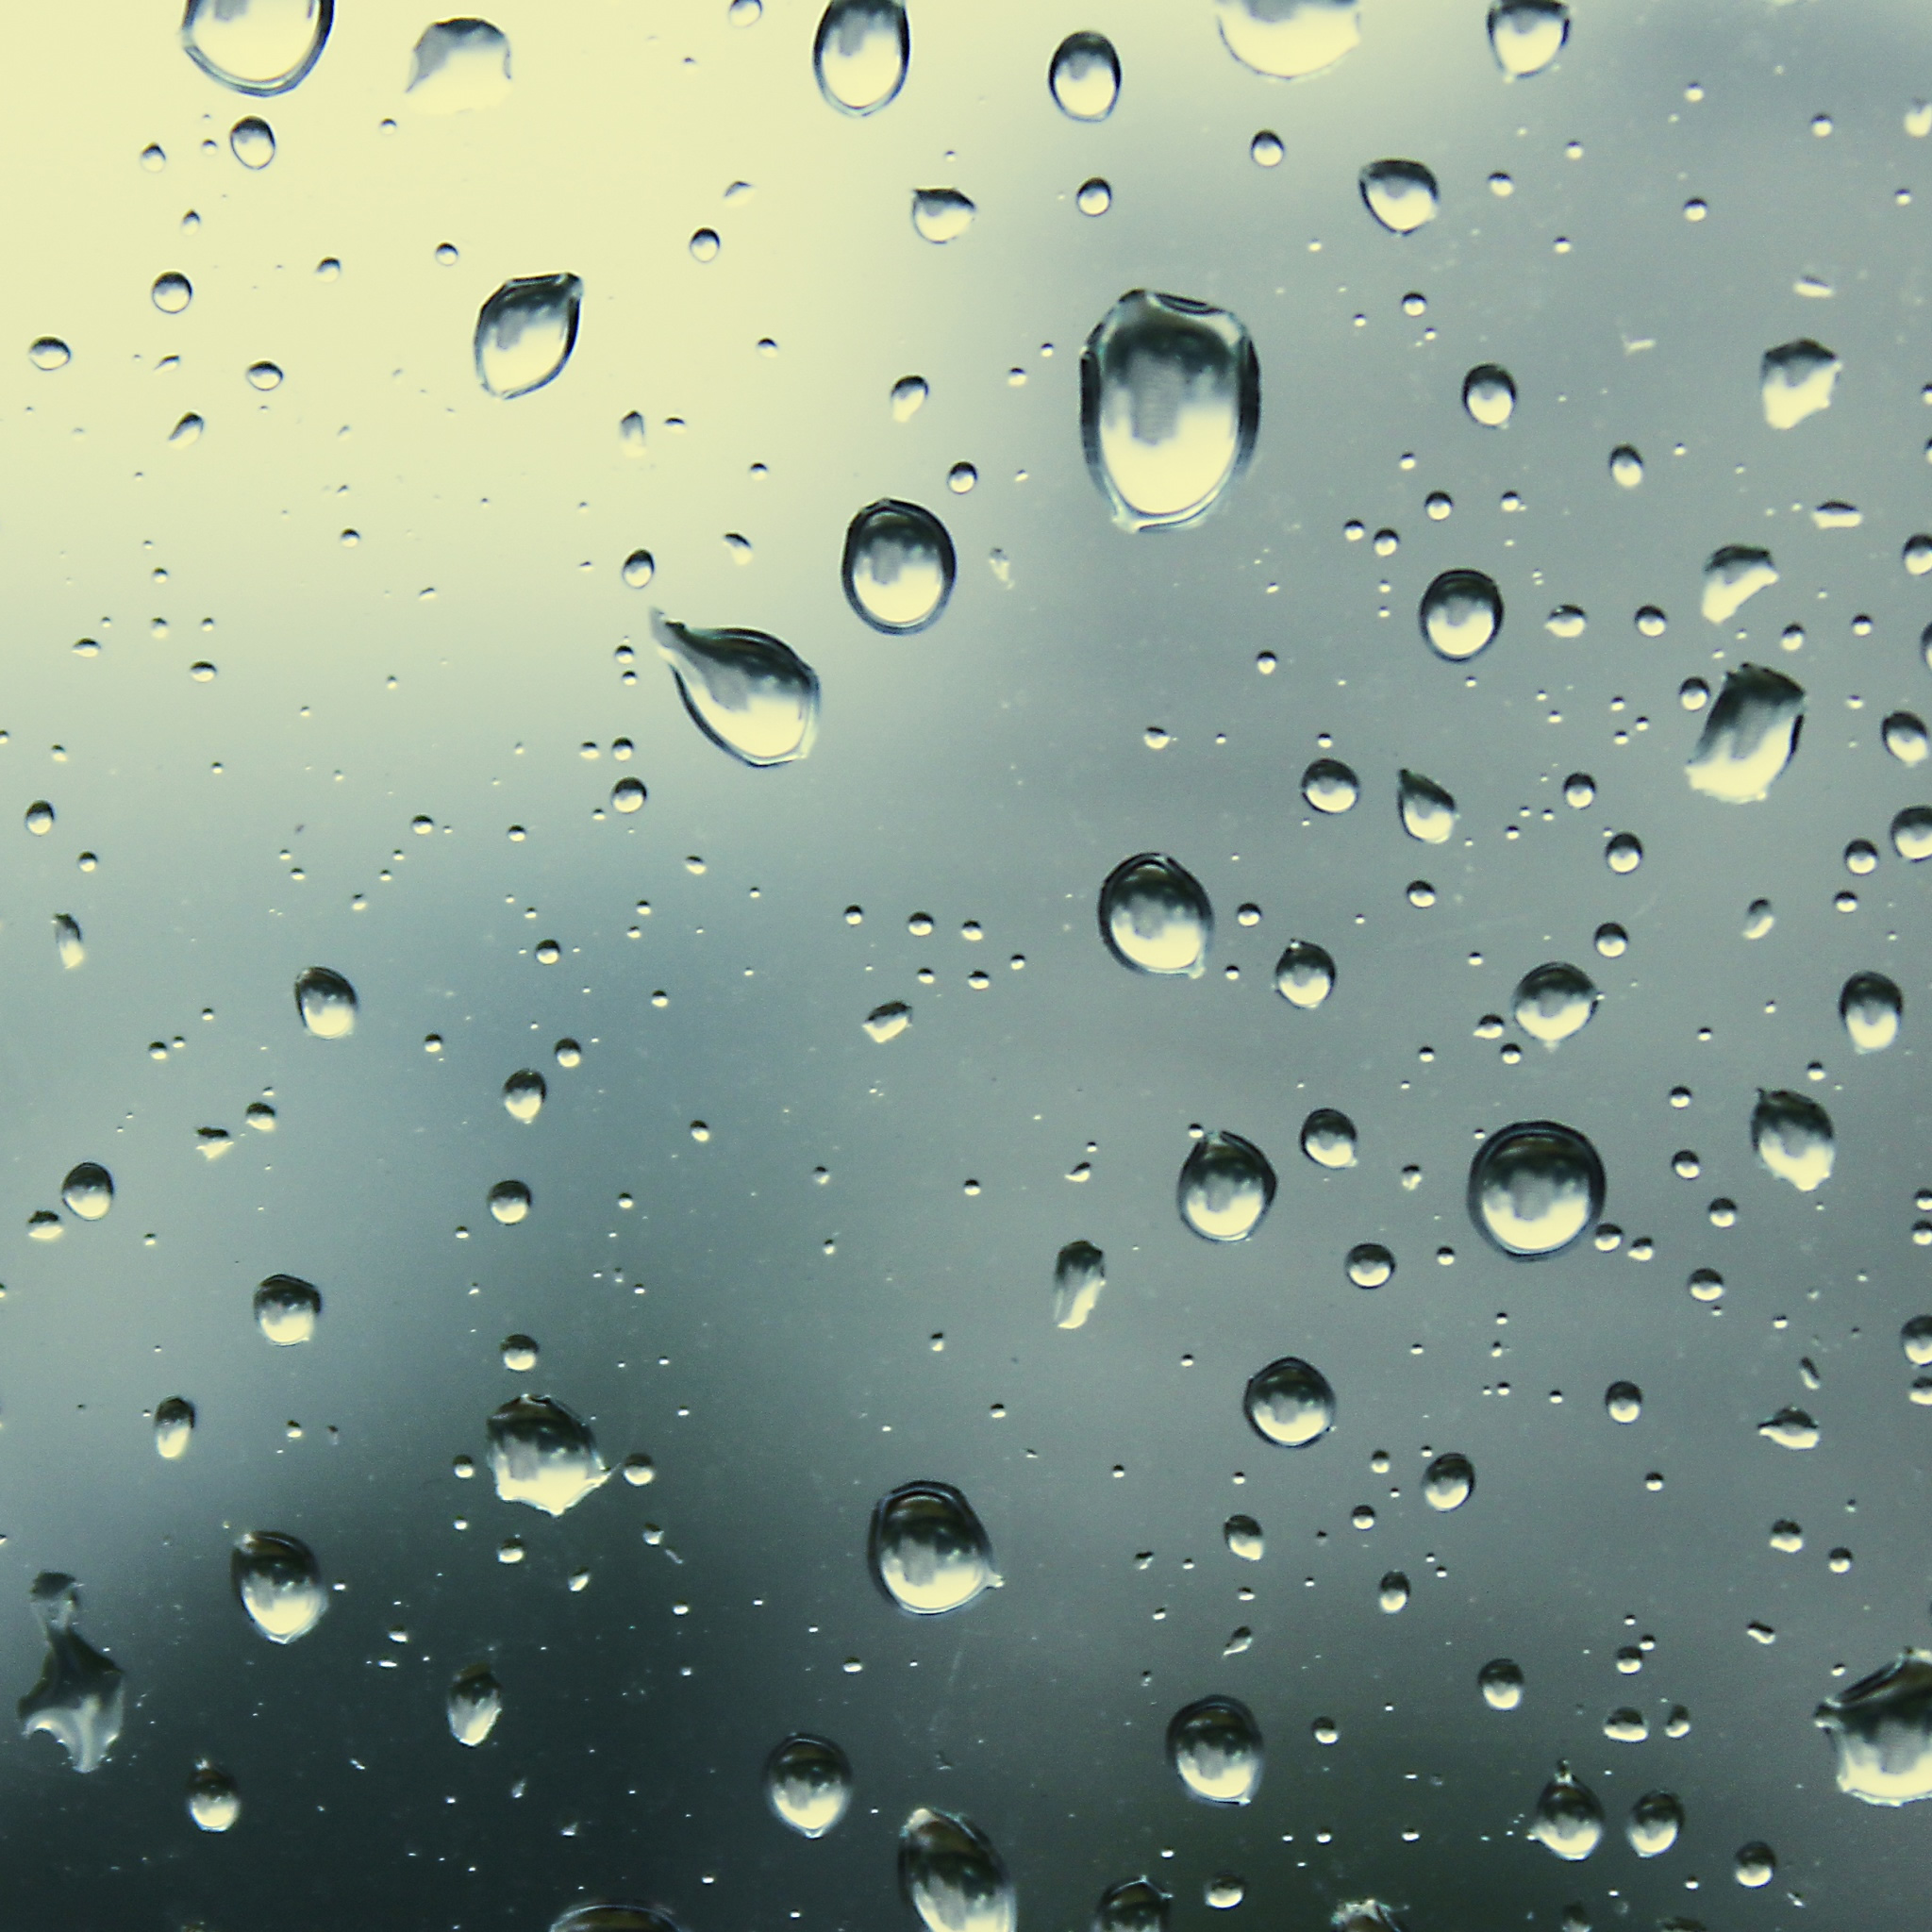 Rain Drops 5 iPad Air Wallpaper Download iPhone Wallpapers iPad